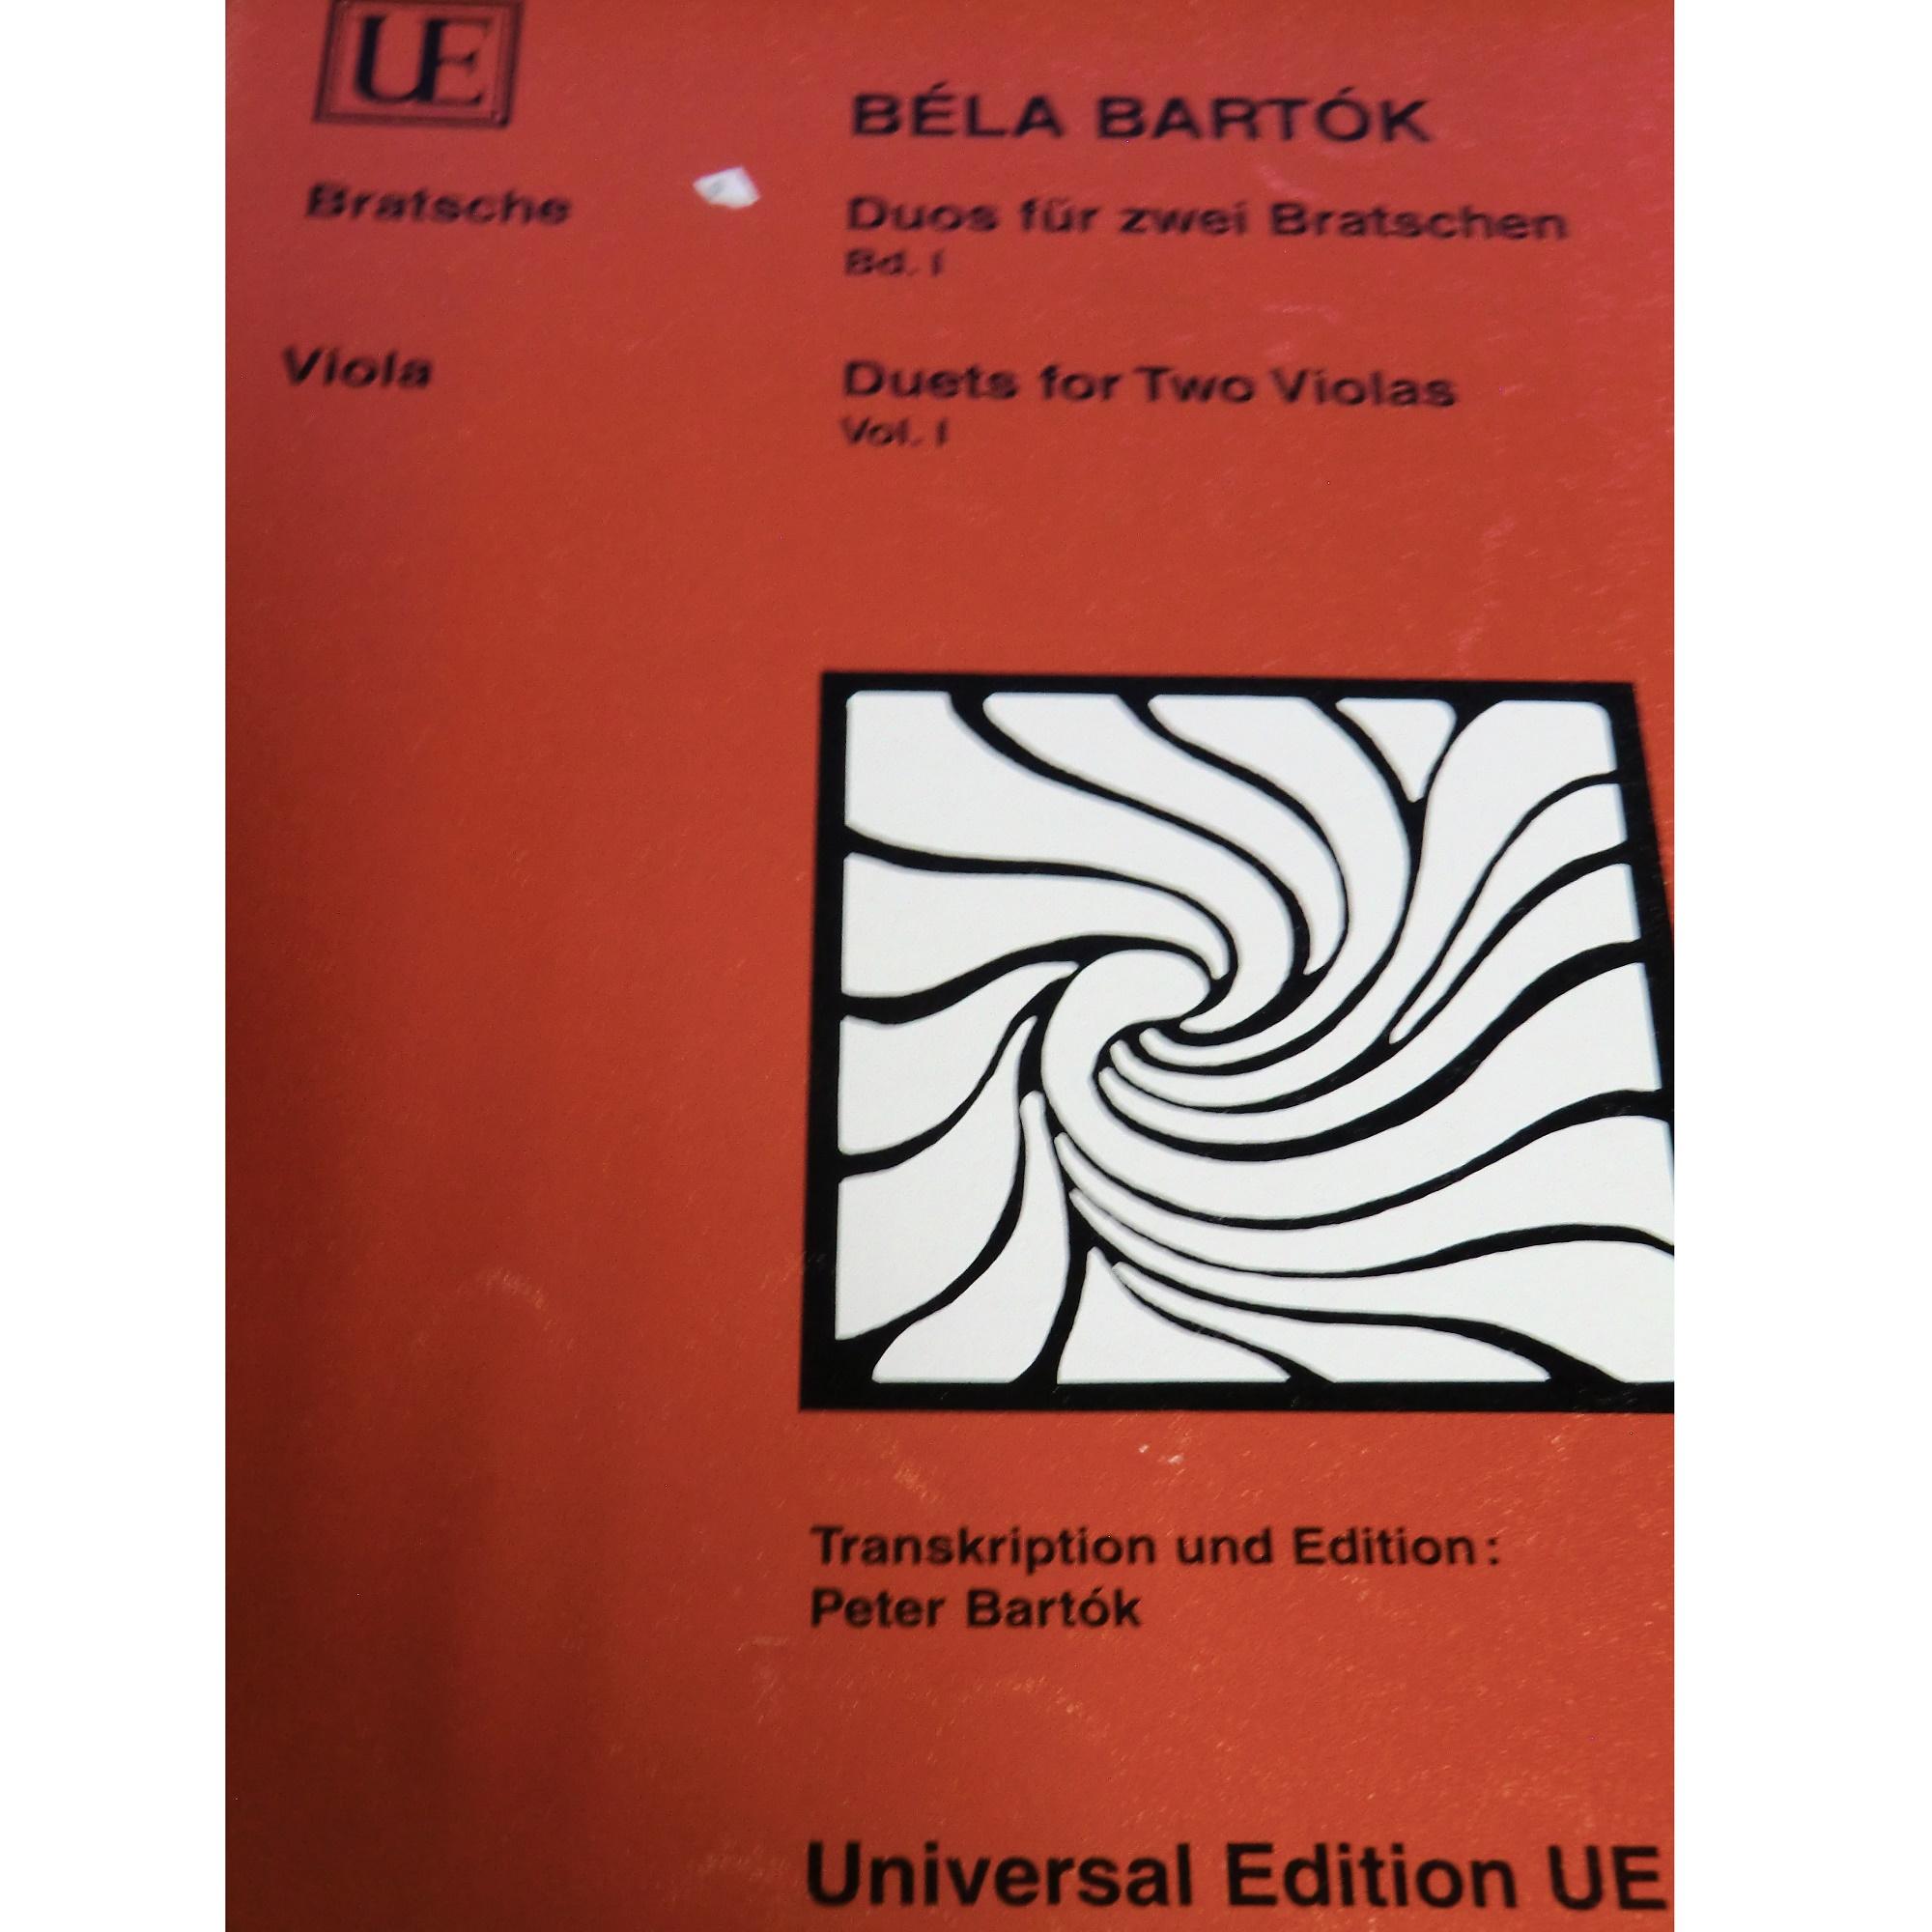 Bela Bartok Viola Duets for two Violas Vol. I - Universal Edition 